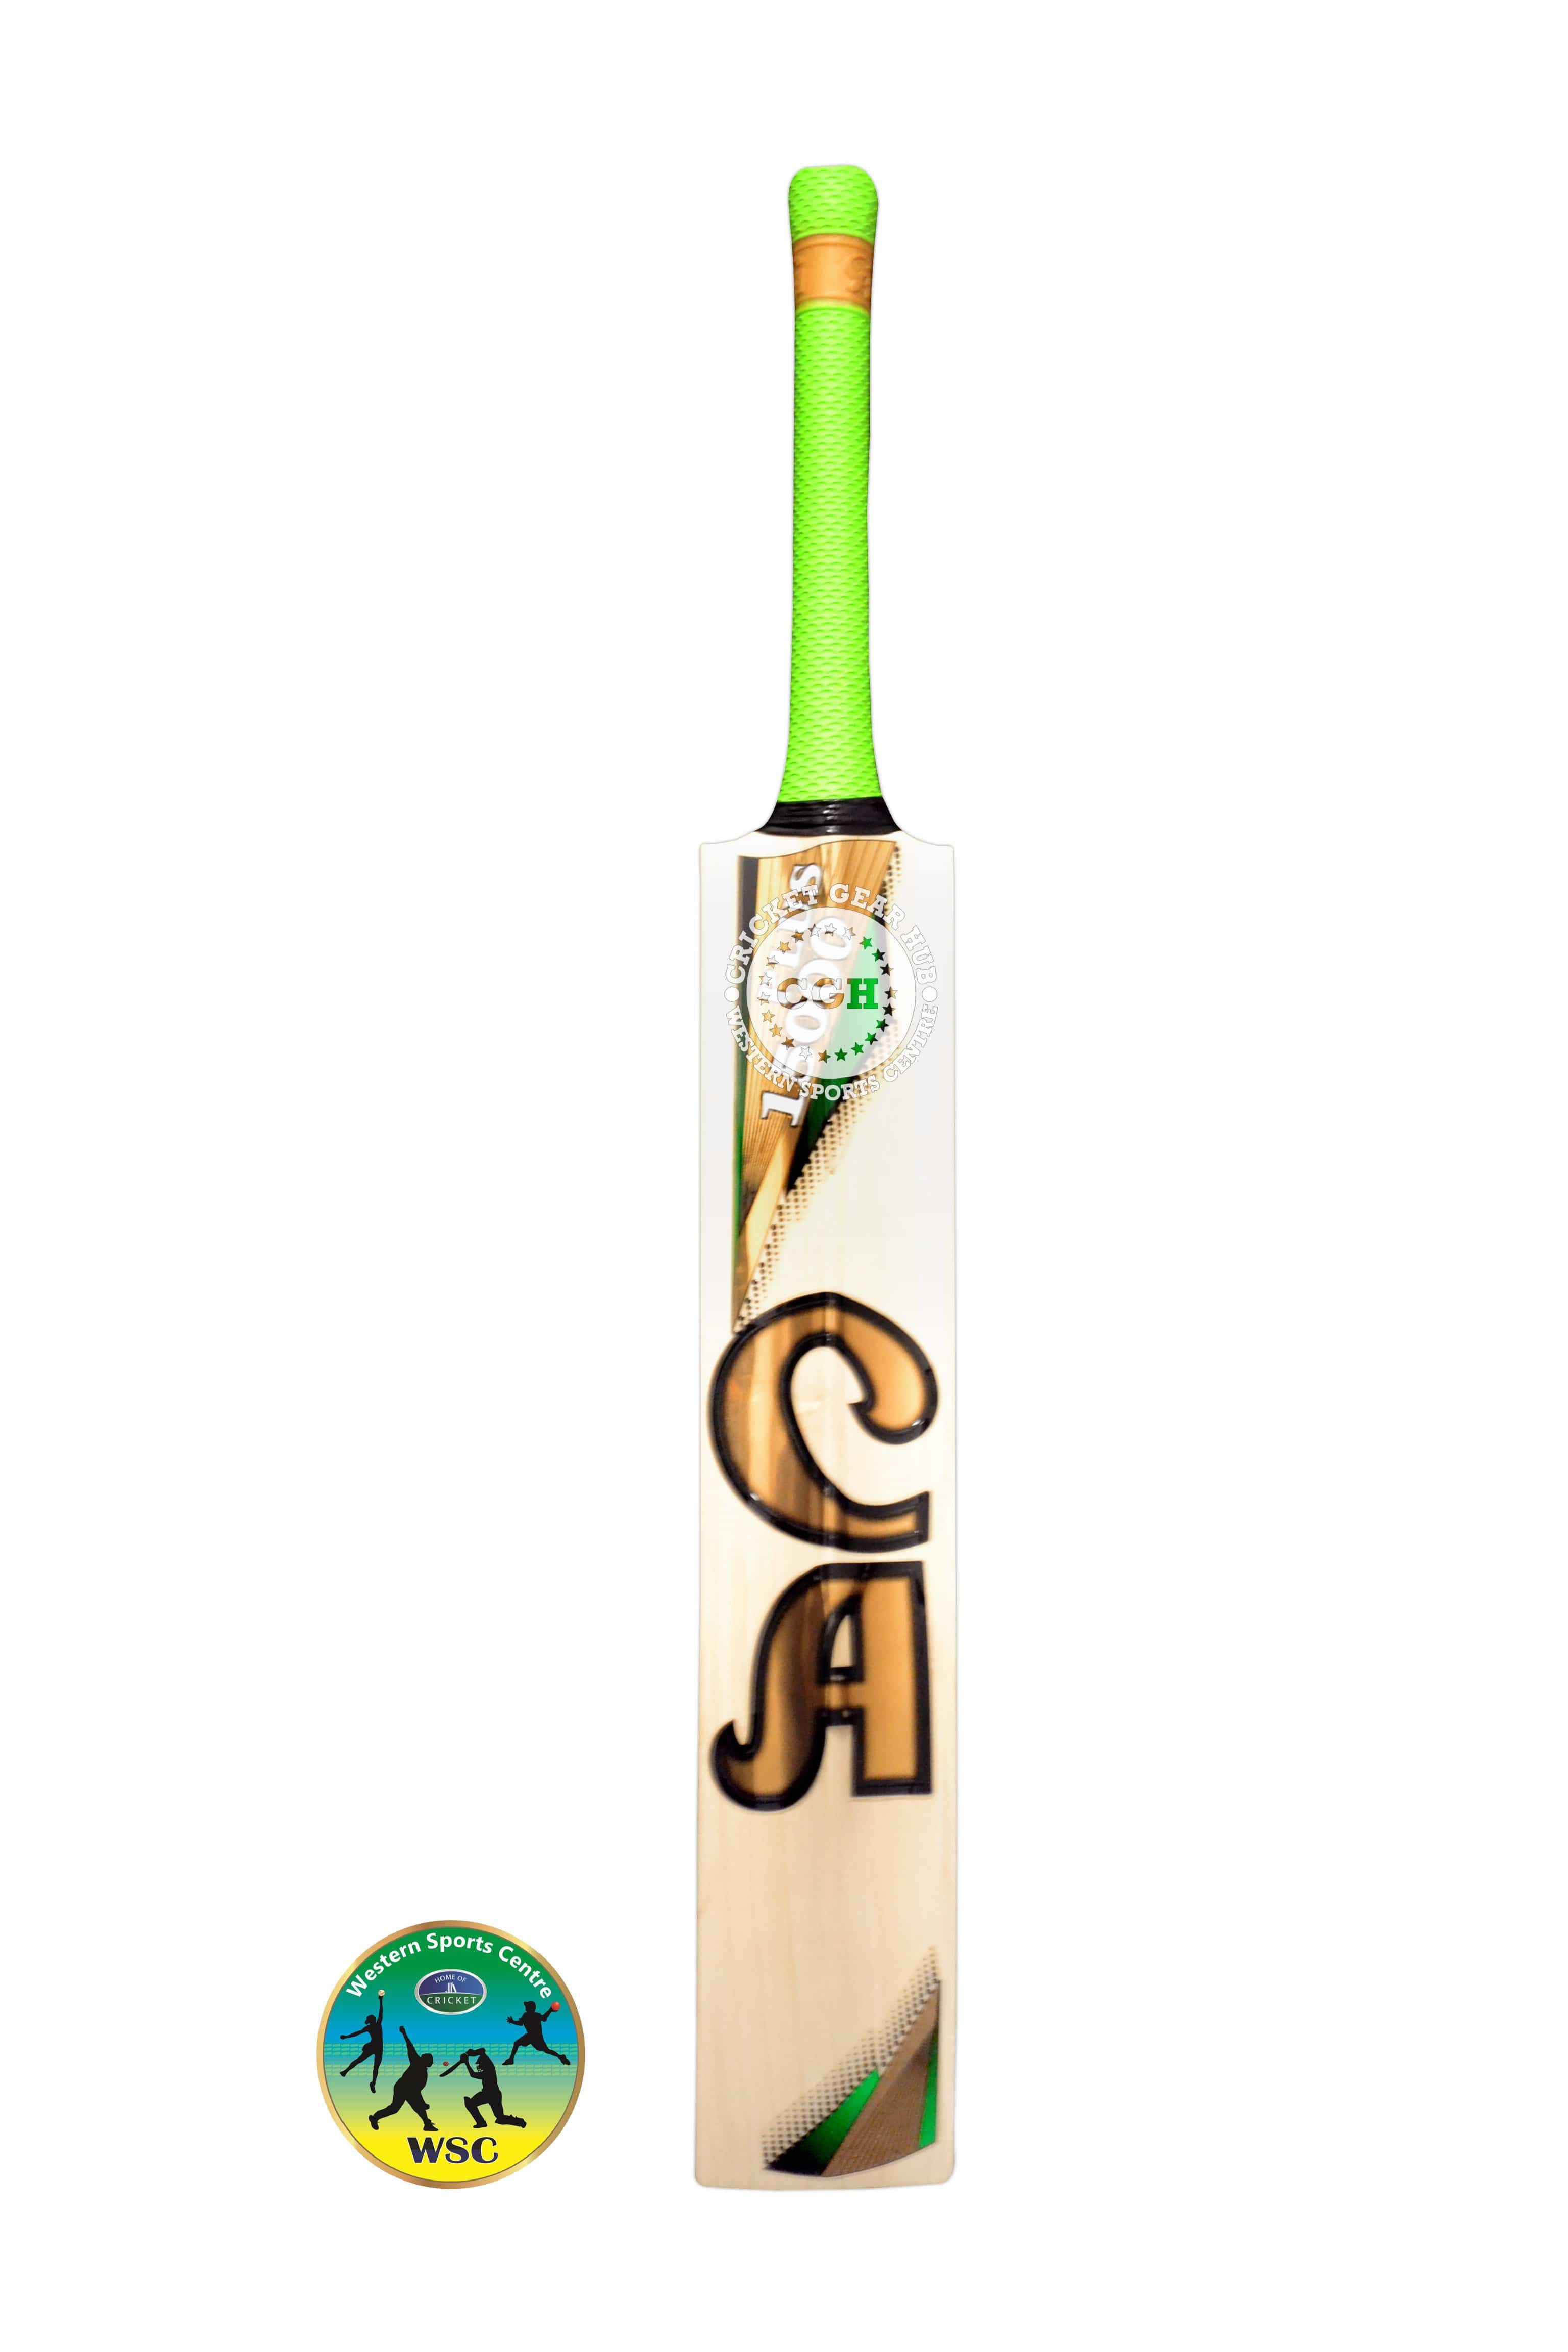 CA Cricket Bats Short Hand CA Plus 15000 Players Grade English Willow Cricket Bat